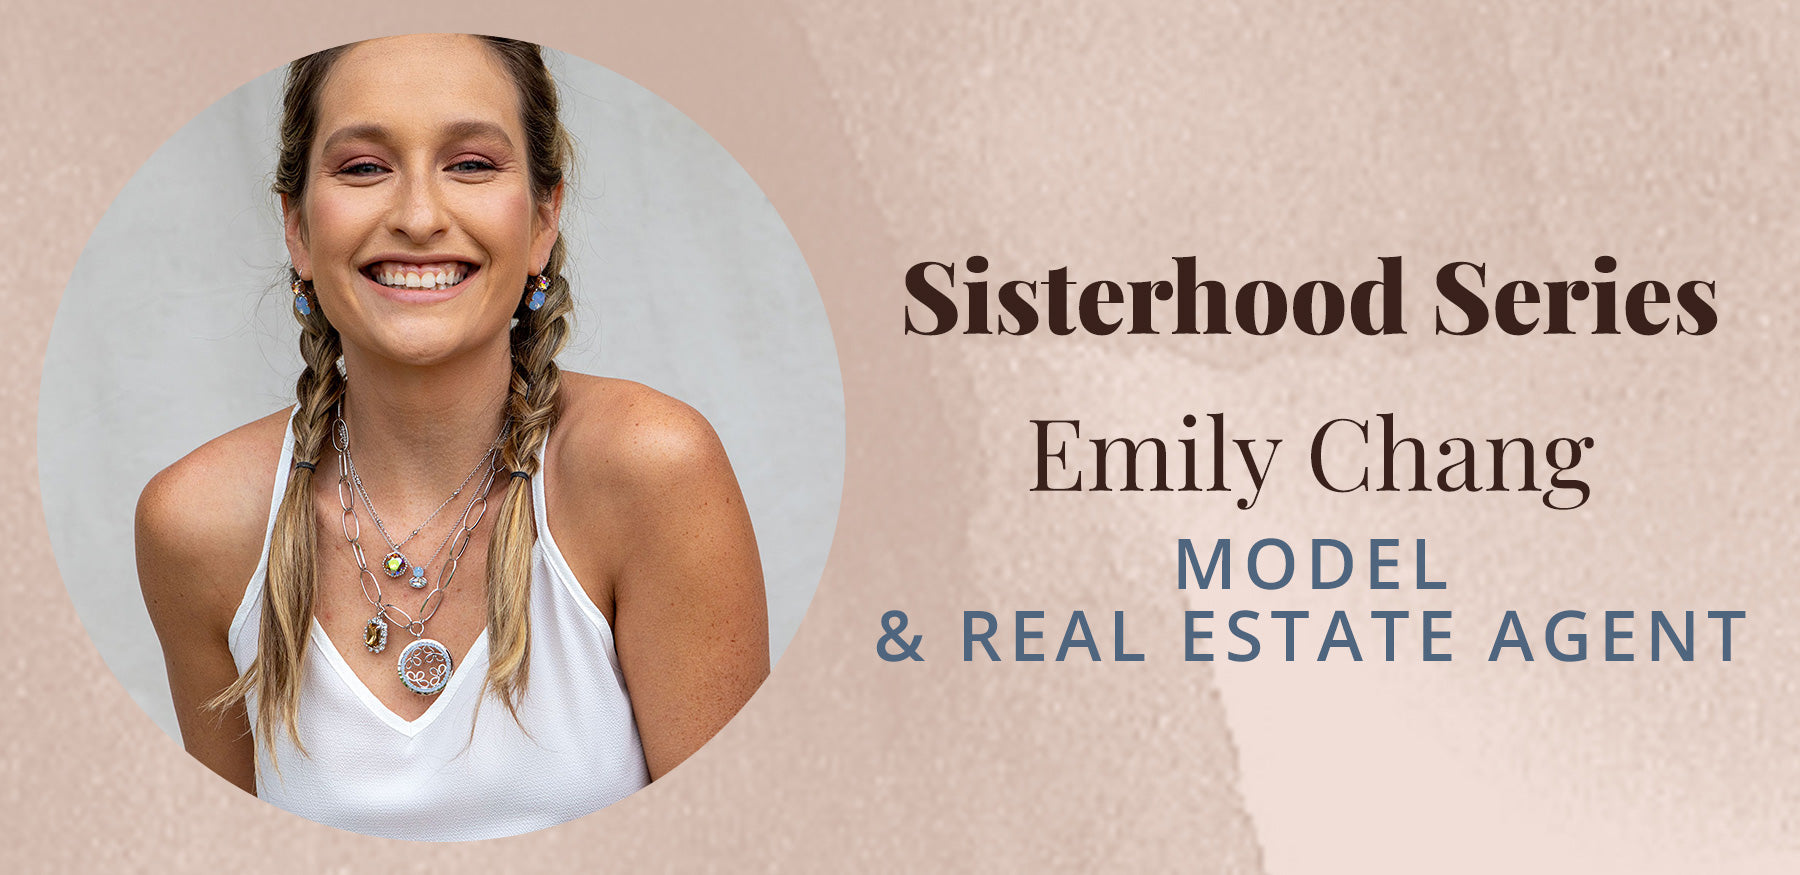 The Sisterhood Series With Emily Chang